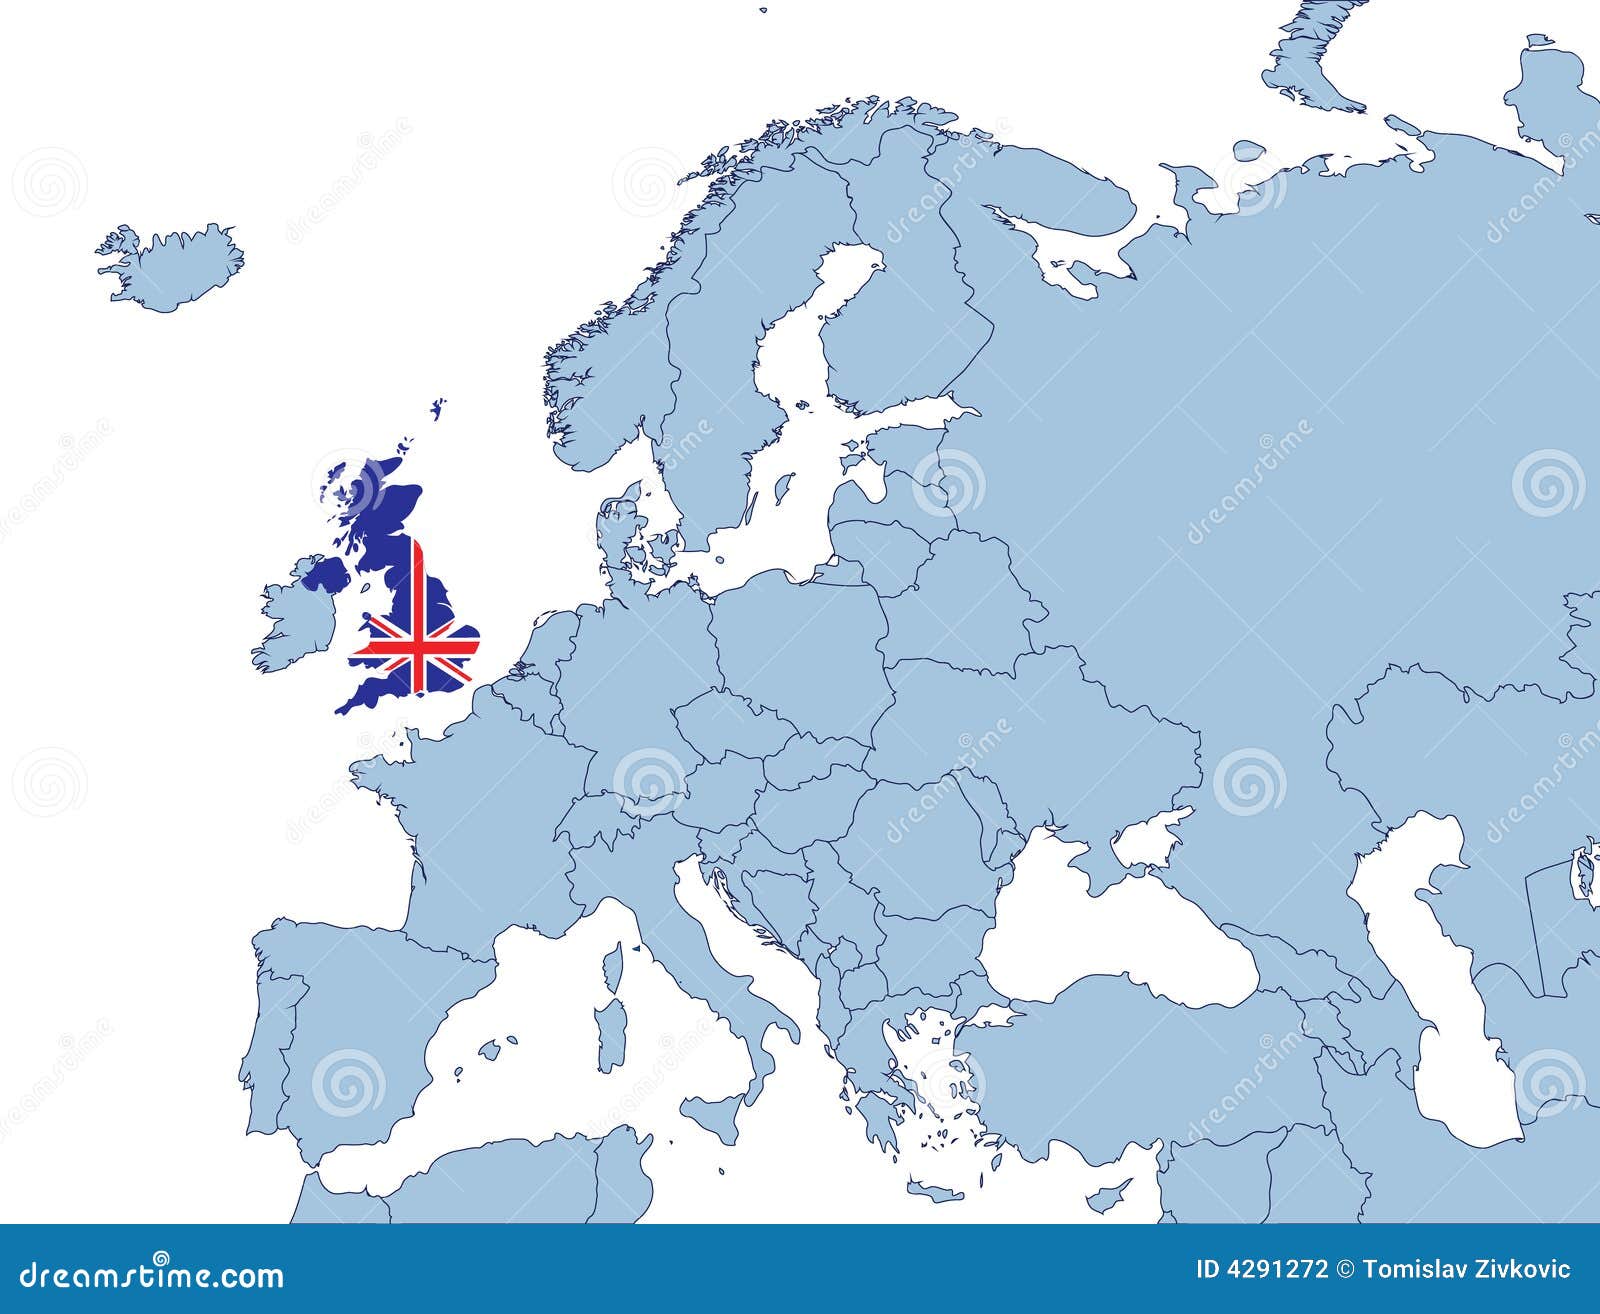 Uk On Europe Map Stock Vector Illustration Of Union Isolated